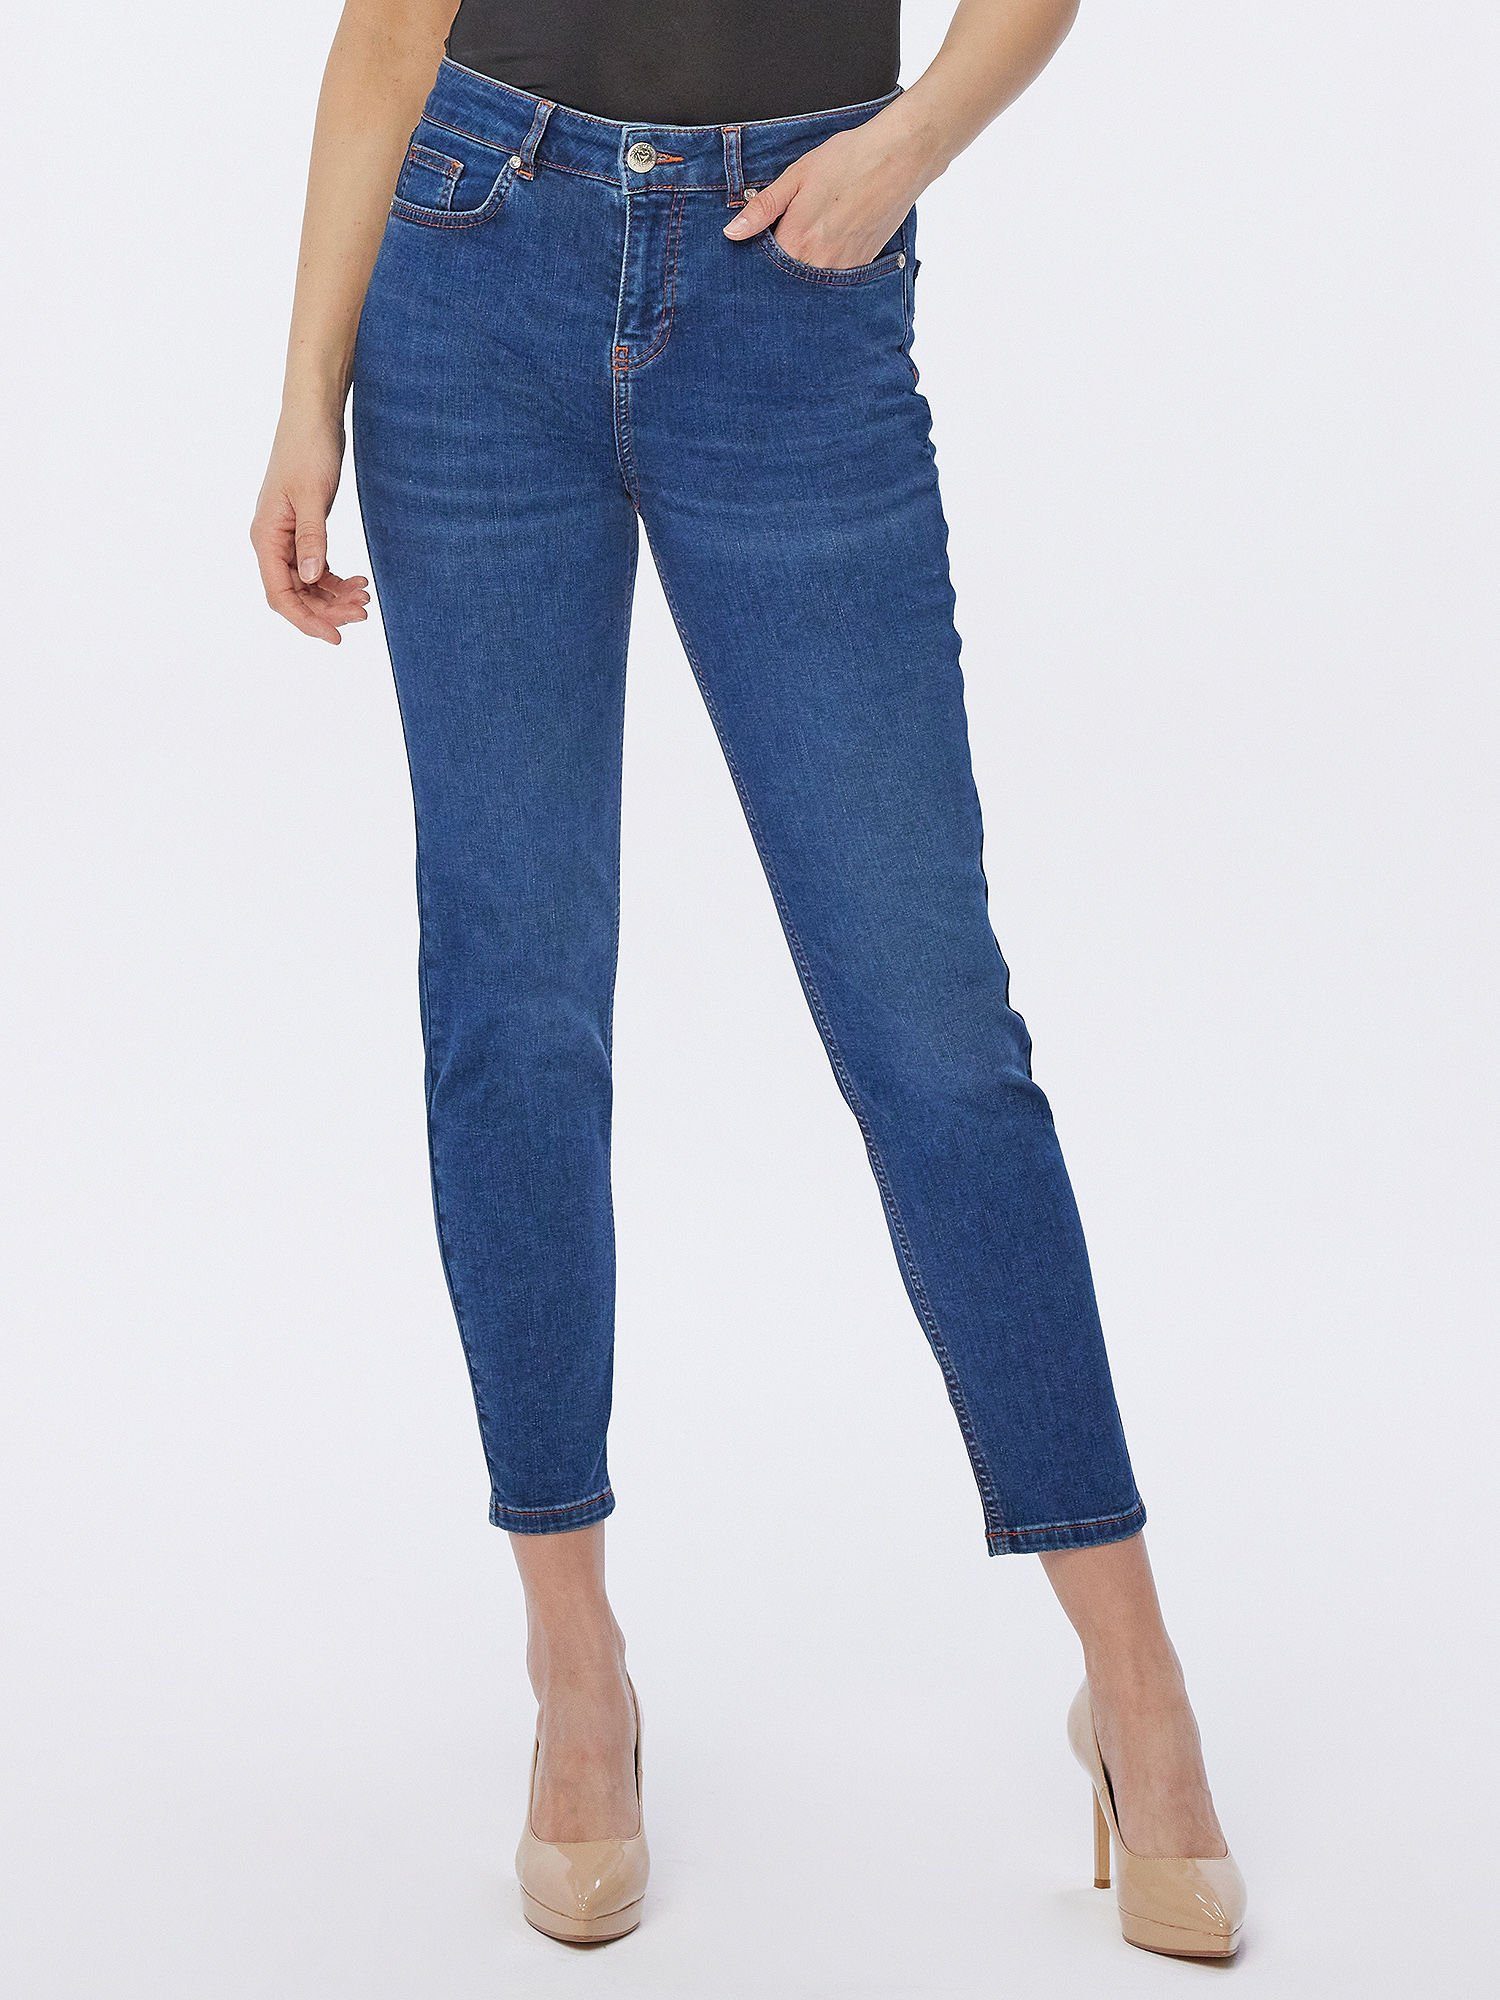 Großer Rabatt Christian Materne Skinny-fit-Jeans Denim-Hose 3D mit Zierstitching